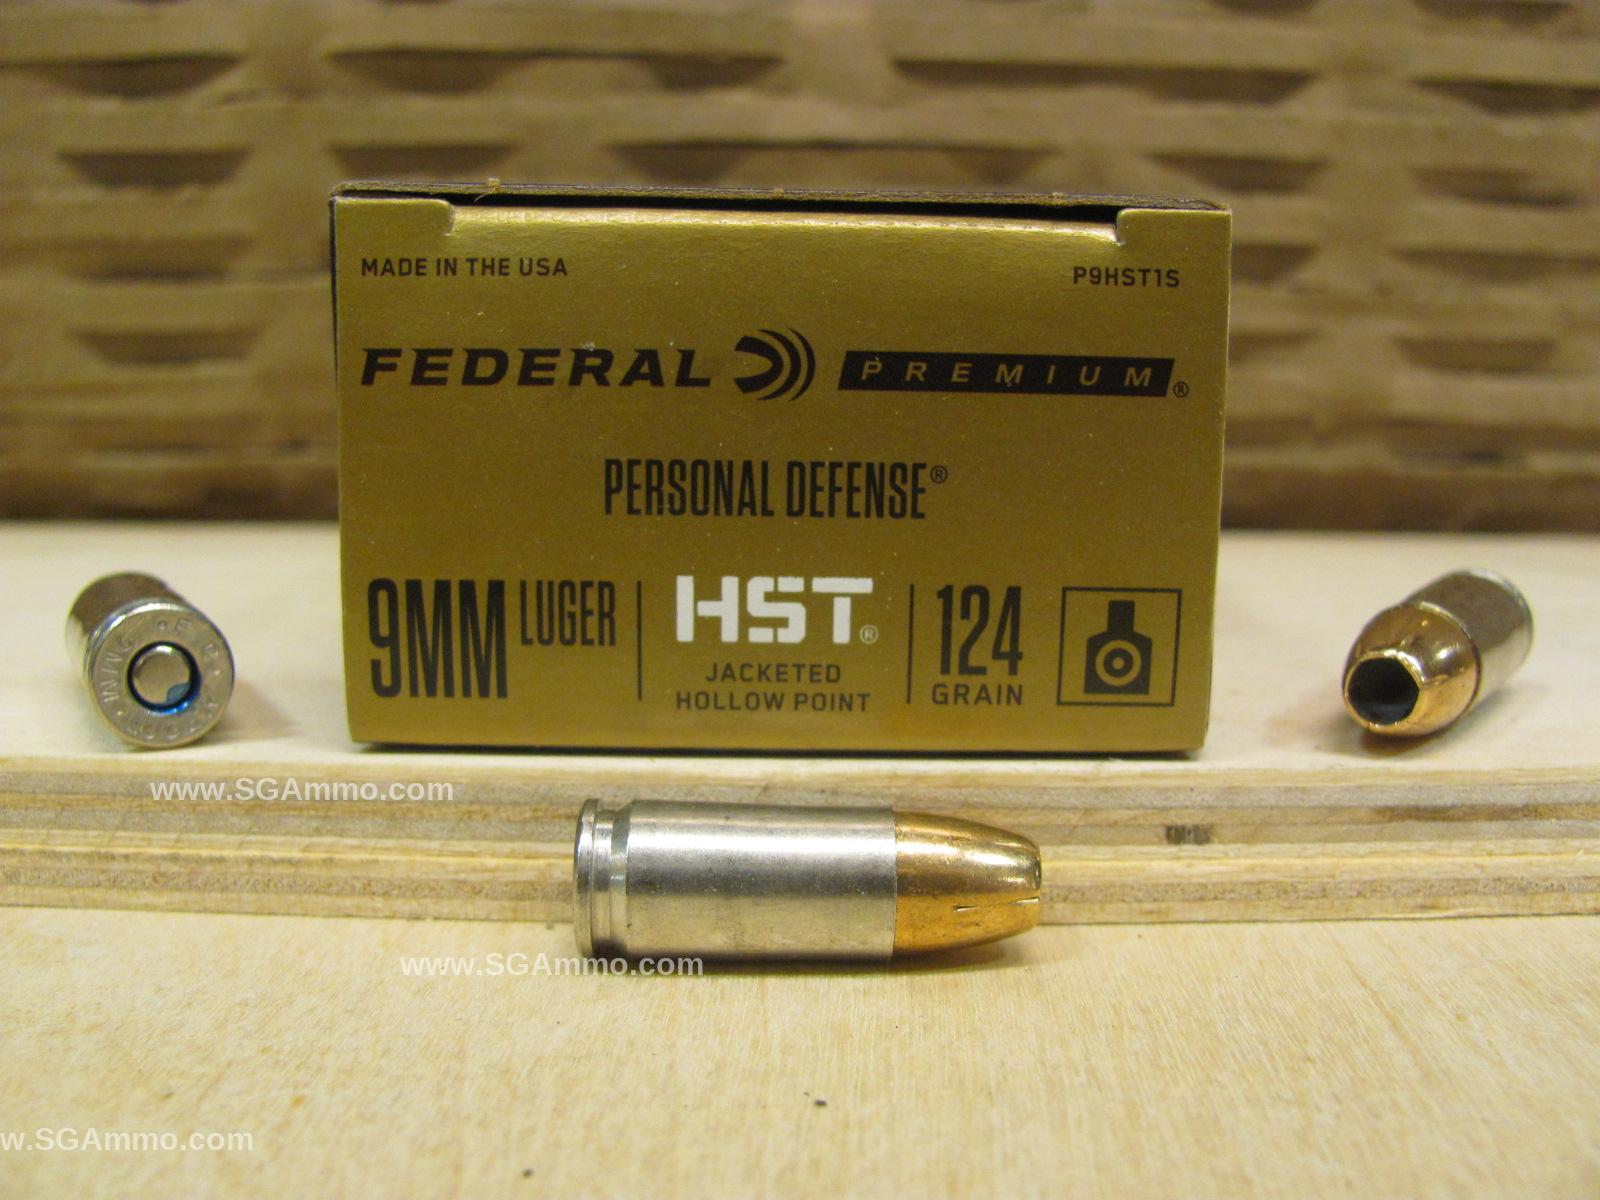 20 Round Box - 9mm Luger Federal HST 124 Grain Hollow Point  Ammo - P9HST1S